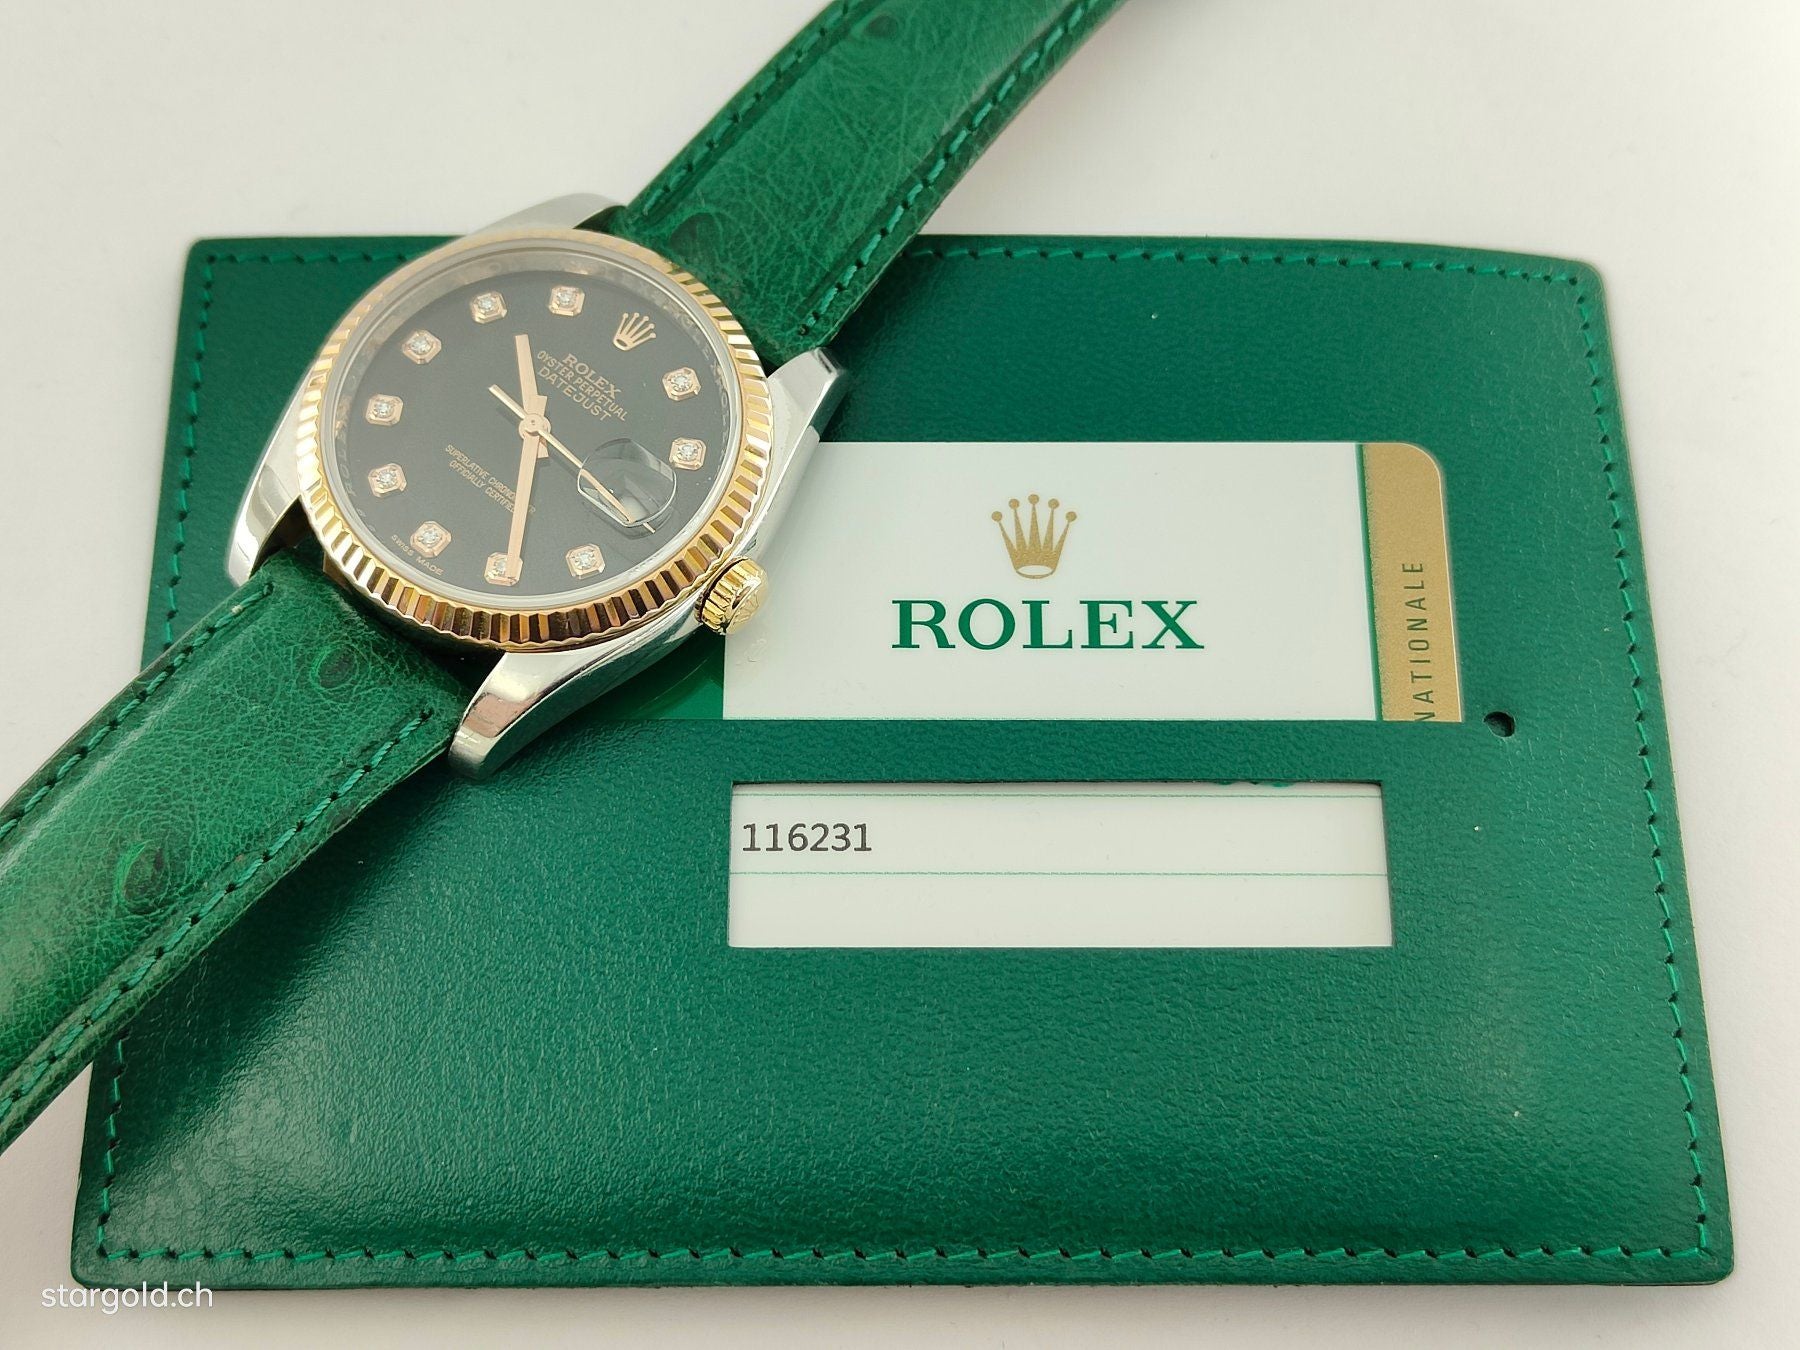 Rolex Datejust 36mm - 116231